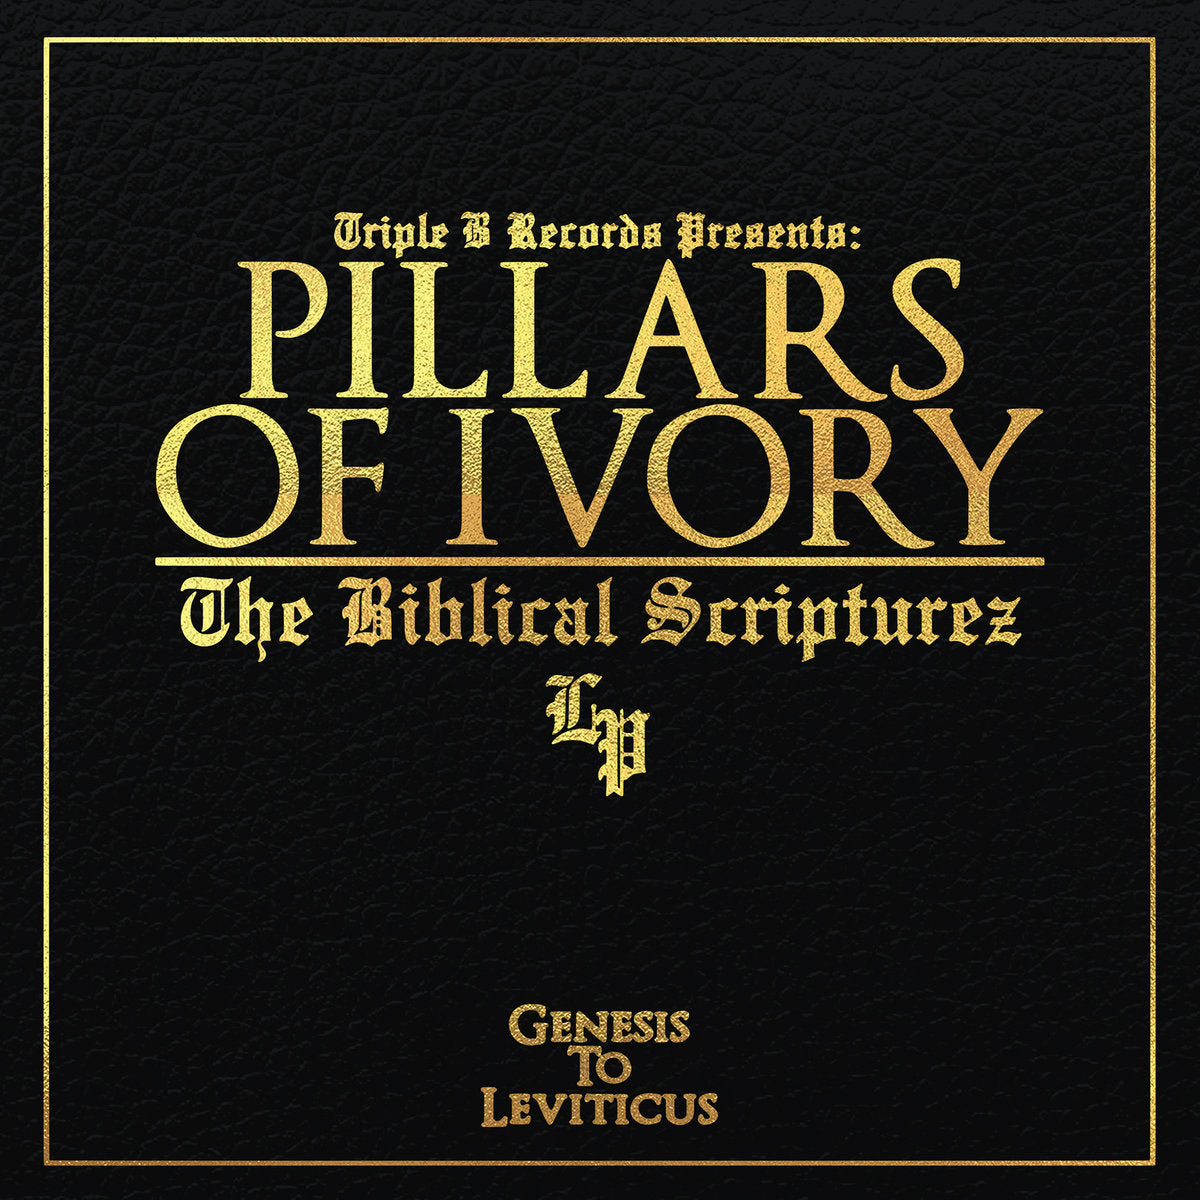 PILLARS OF IVORY "THE BIBLICAL SCRIPTUREZ"